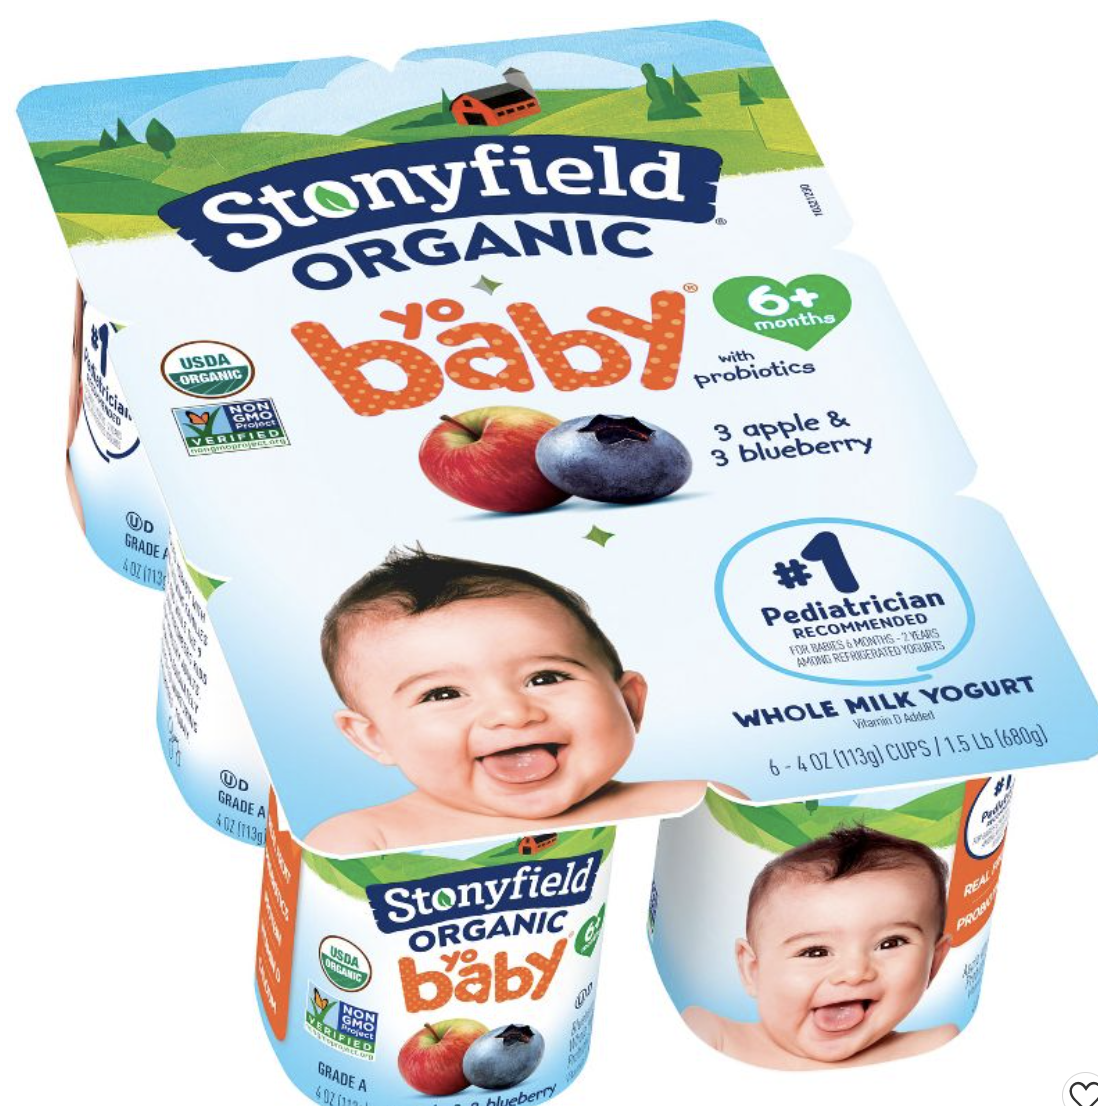 Stonyfield Organic Yobaby 3 Apple & 3 Blueberry Yogurt 6 pk - 4 oz Each